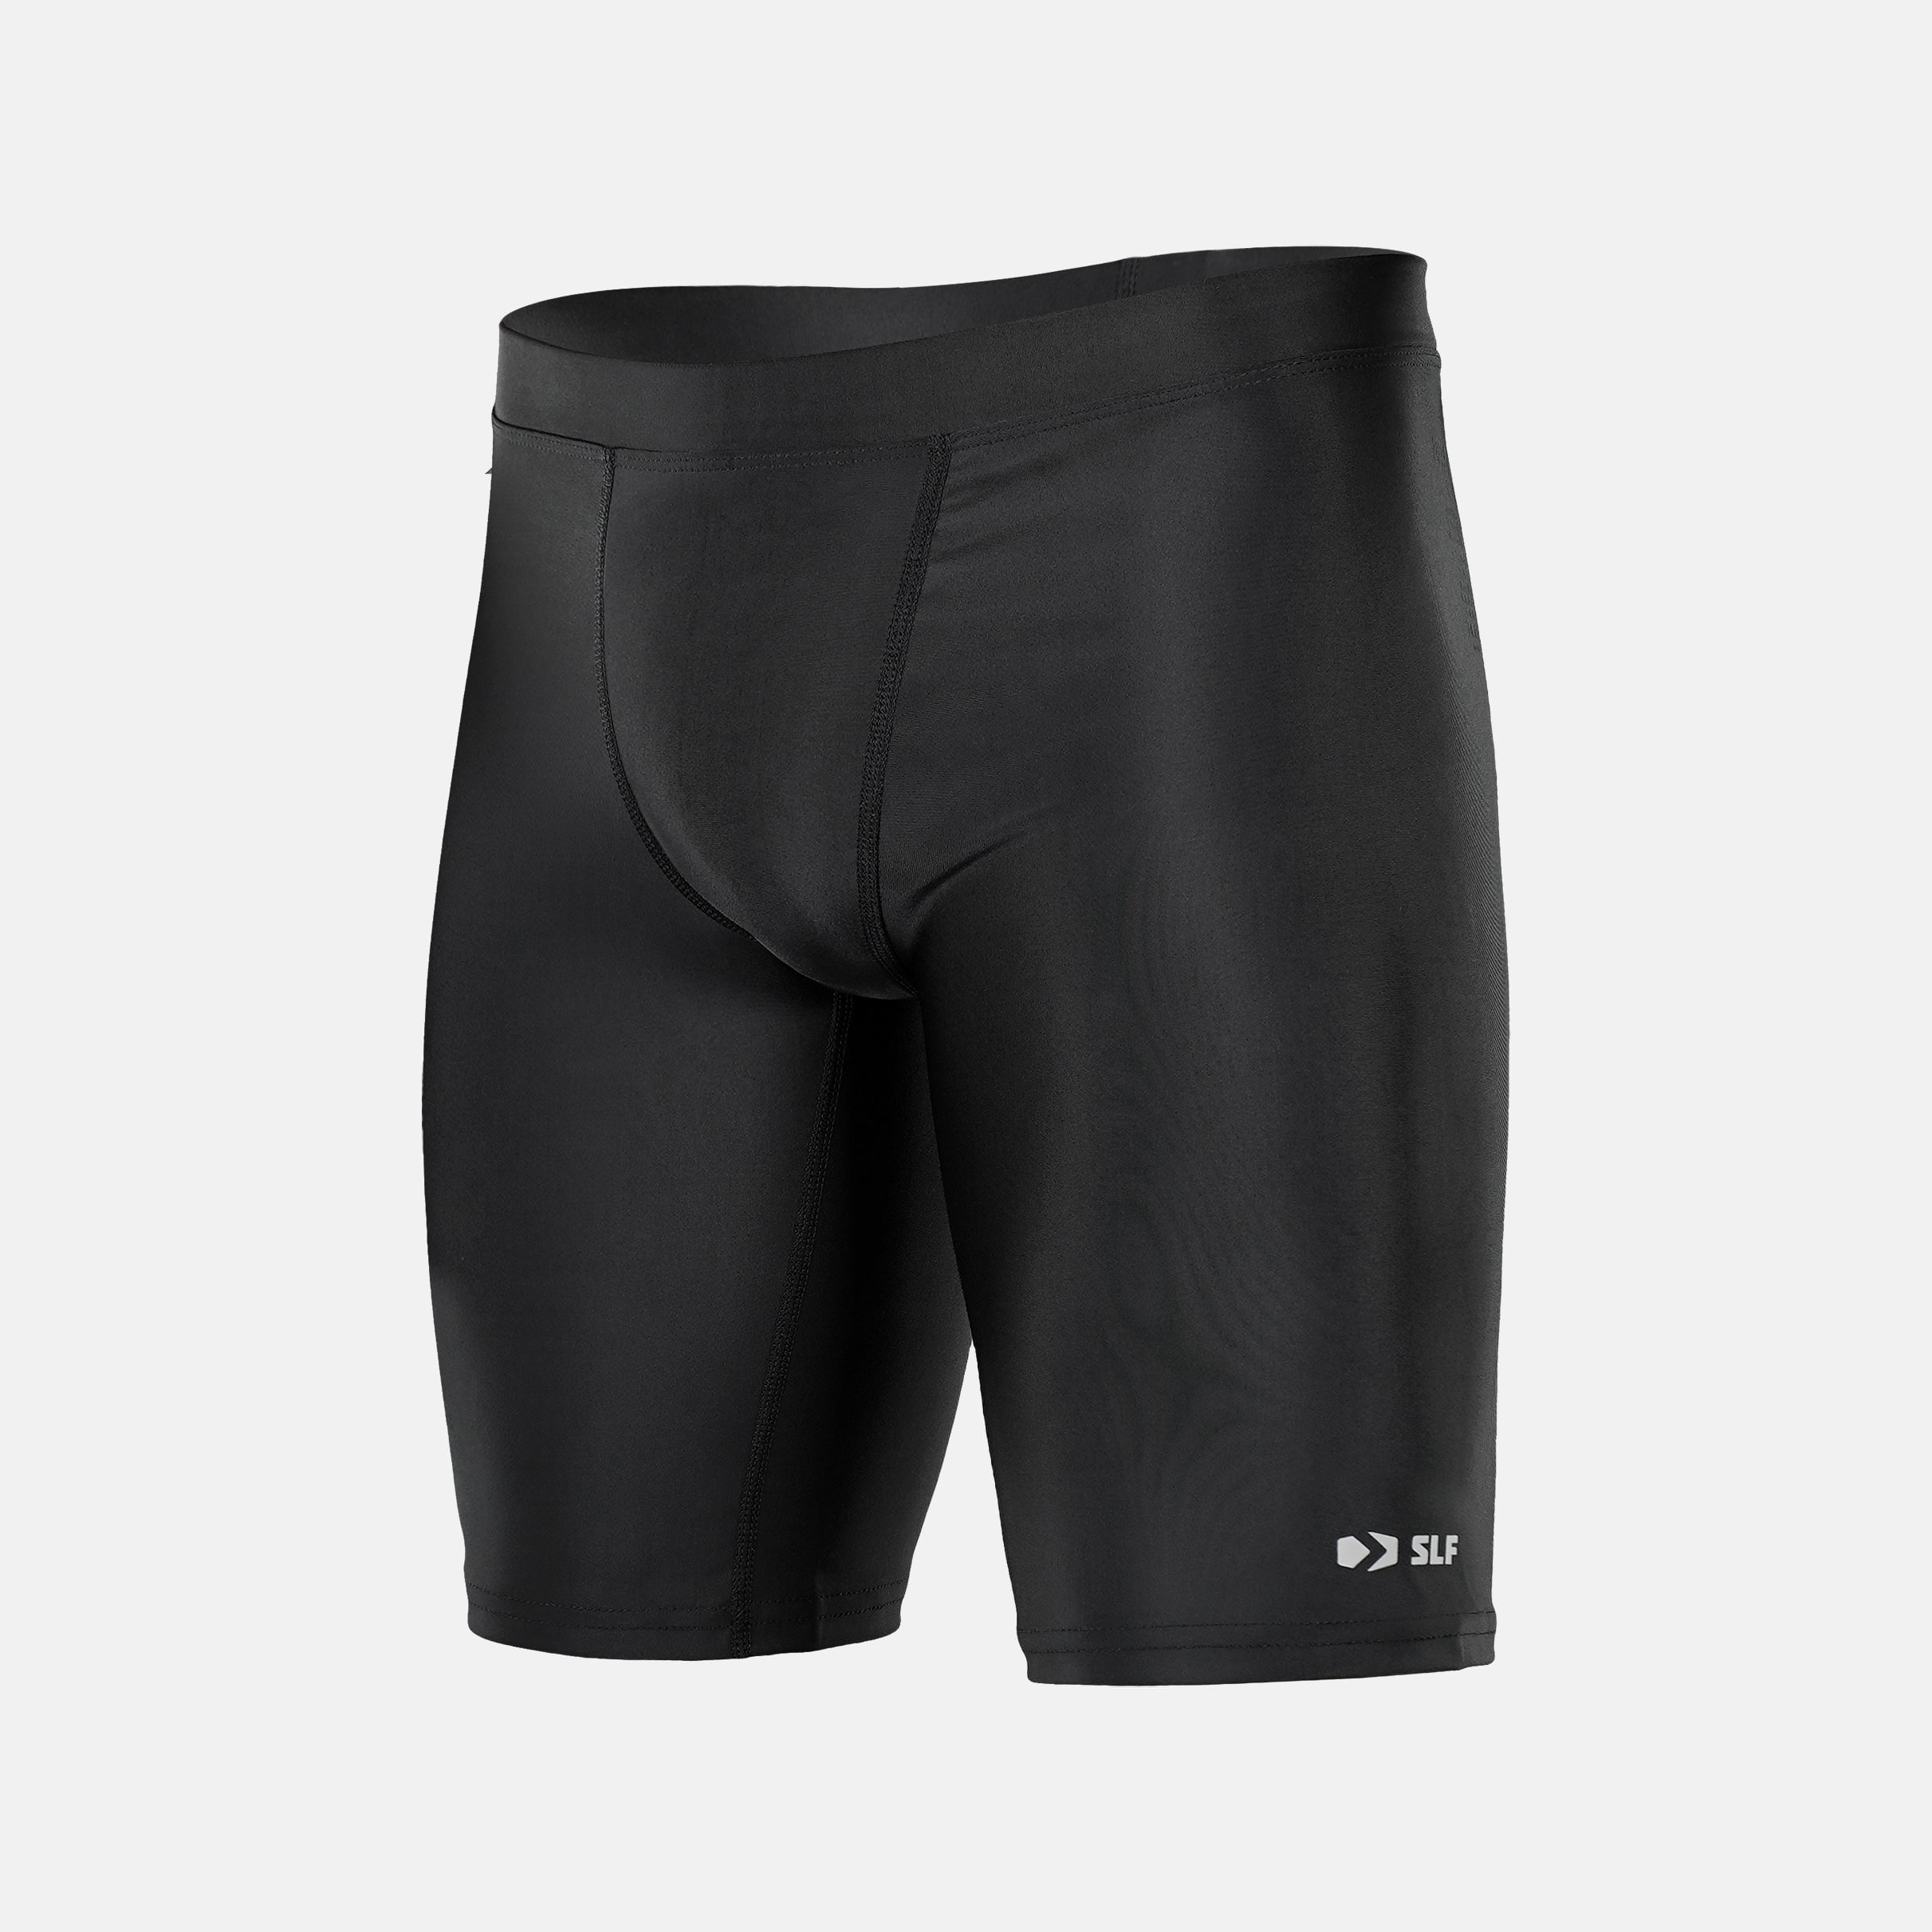 Gubotare Sweatpants For Men Jogger Men's Slim Jogger Pants, -Sweatpants for  Jogging Running Workout Exercise Gym Pants,Green 3XL 